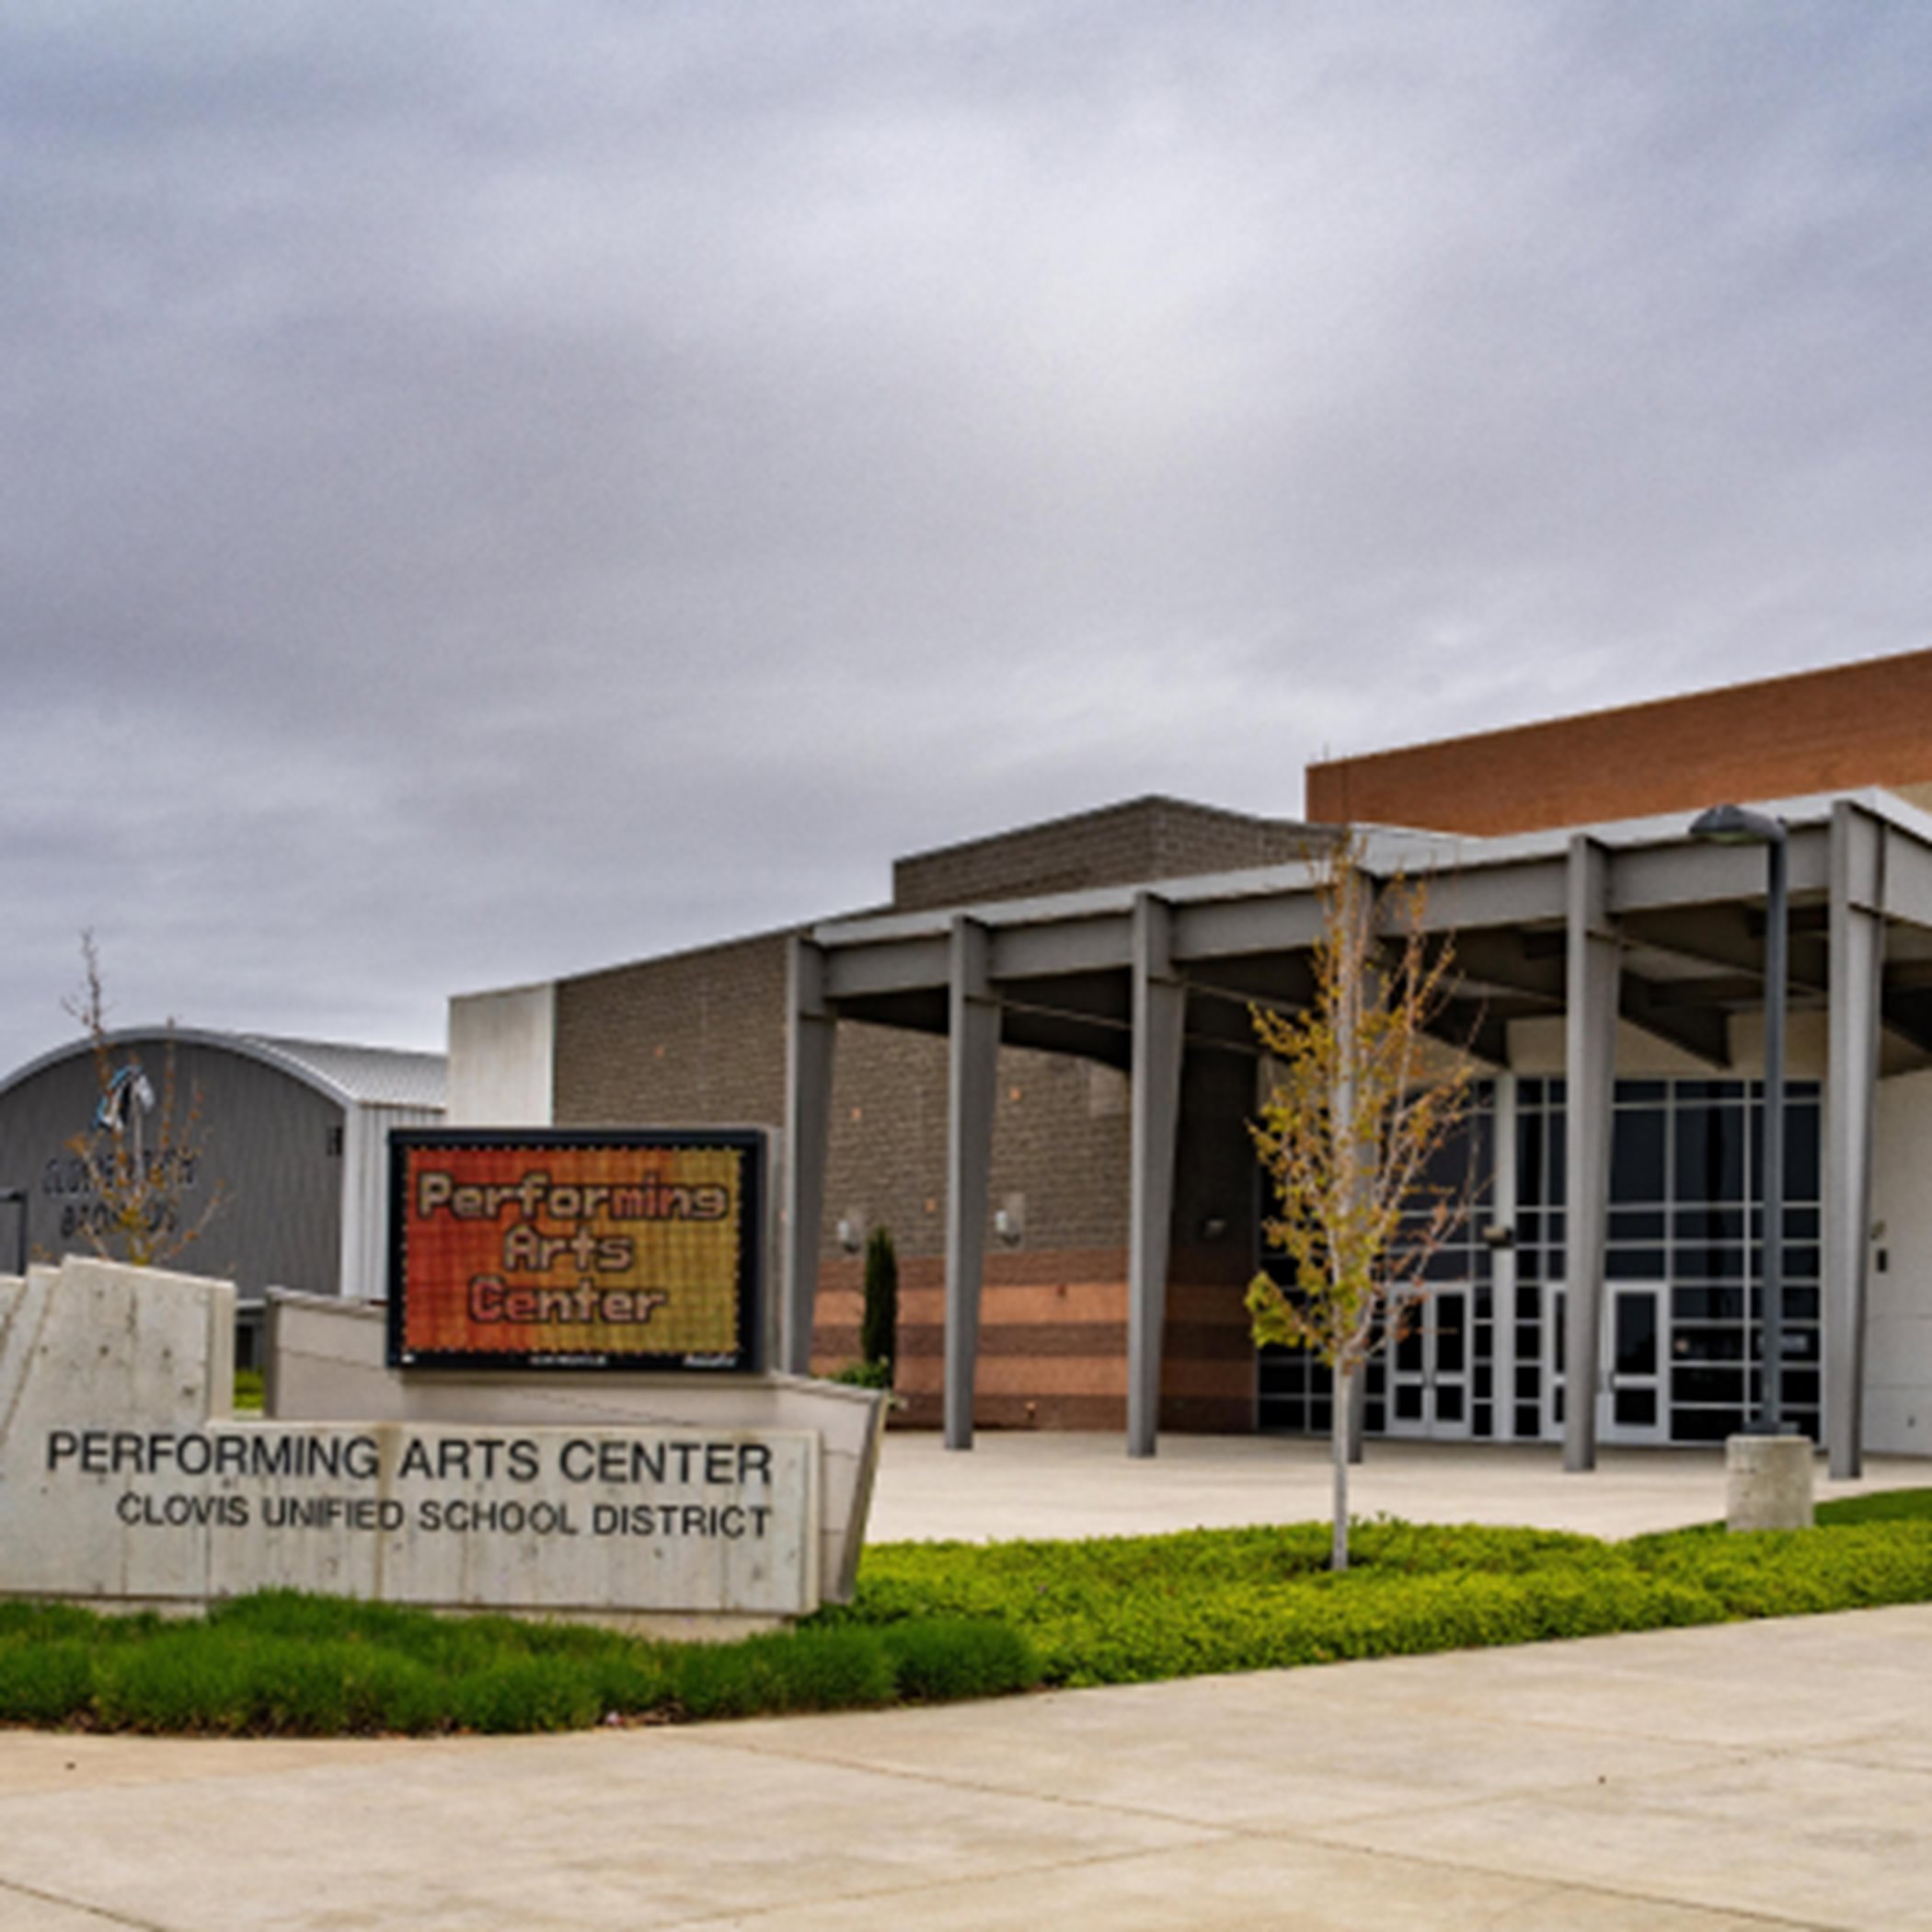 Clovis Unified School District Performing Arts Center entrance